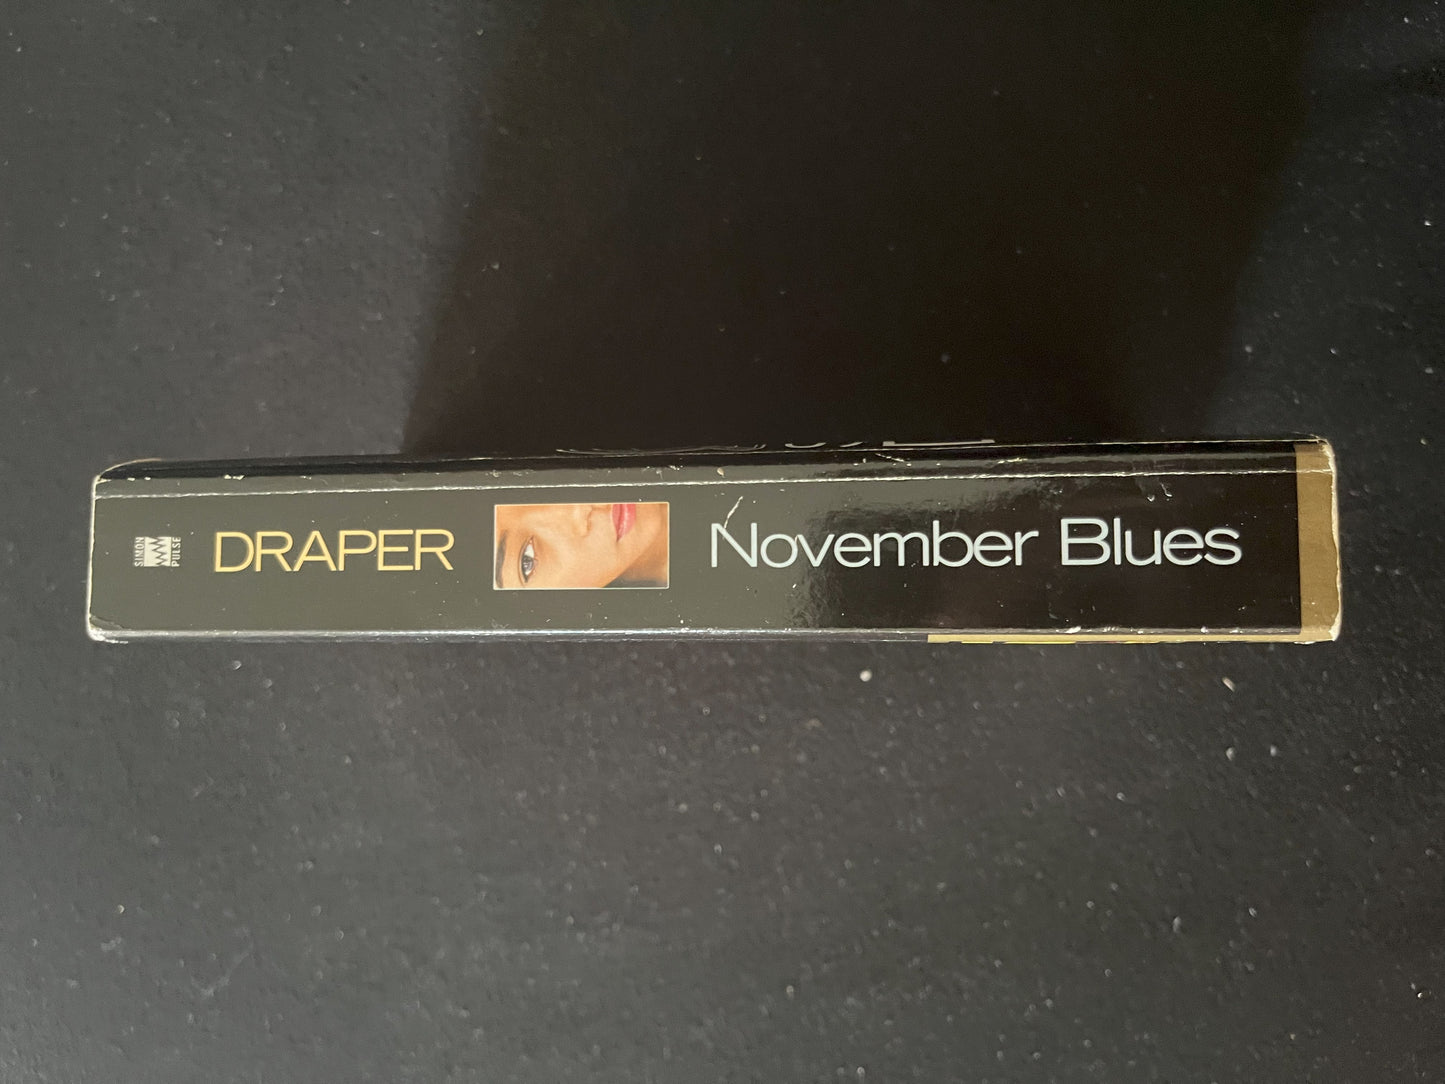 NOVEMBER BLUES by Sharon M. Draper